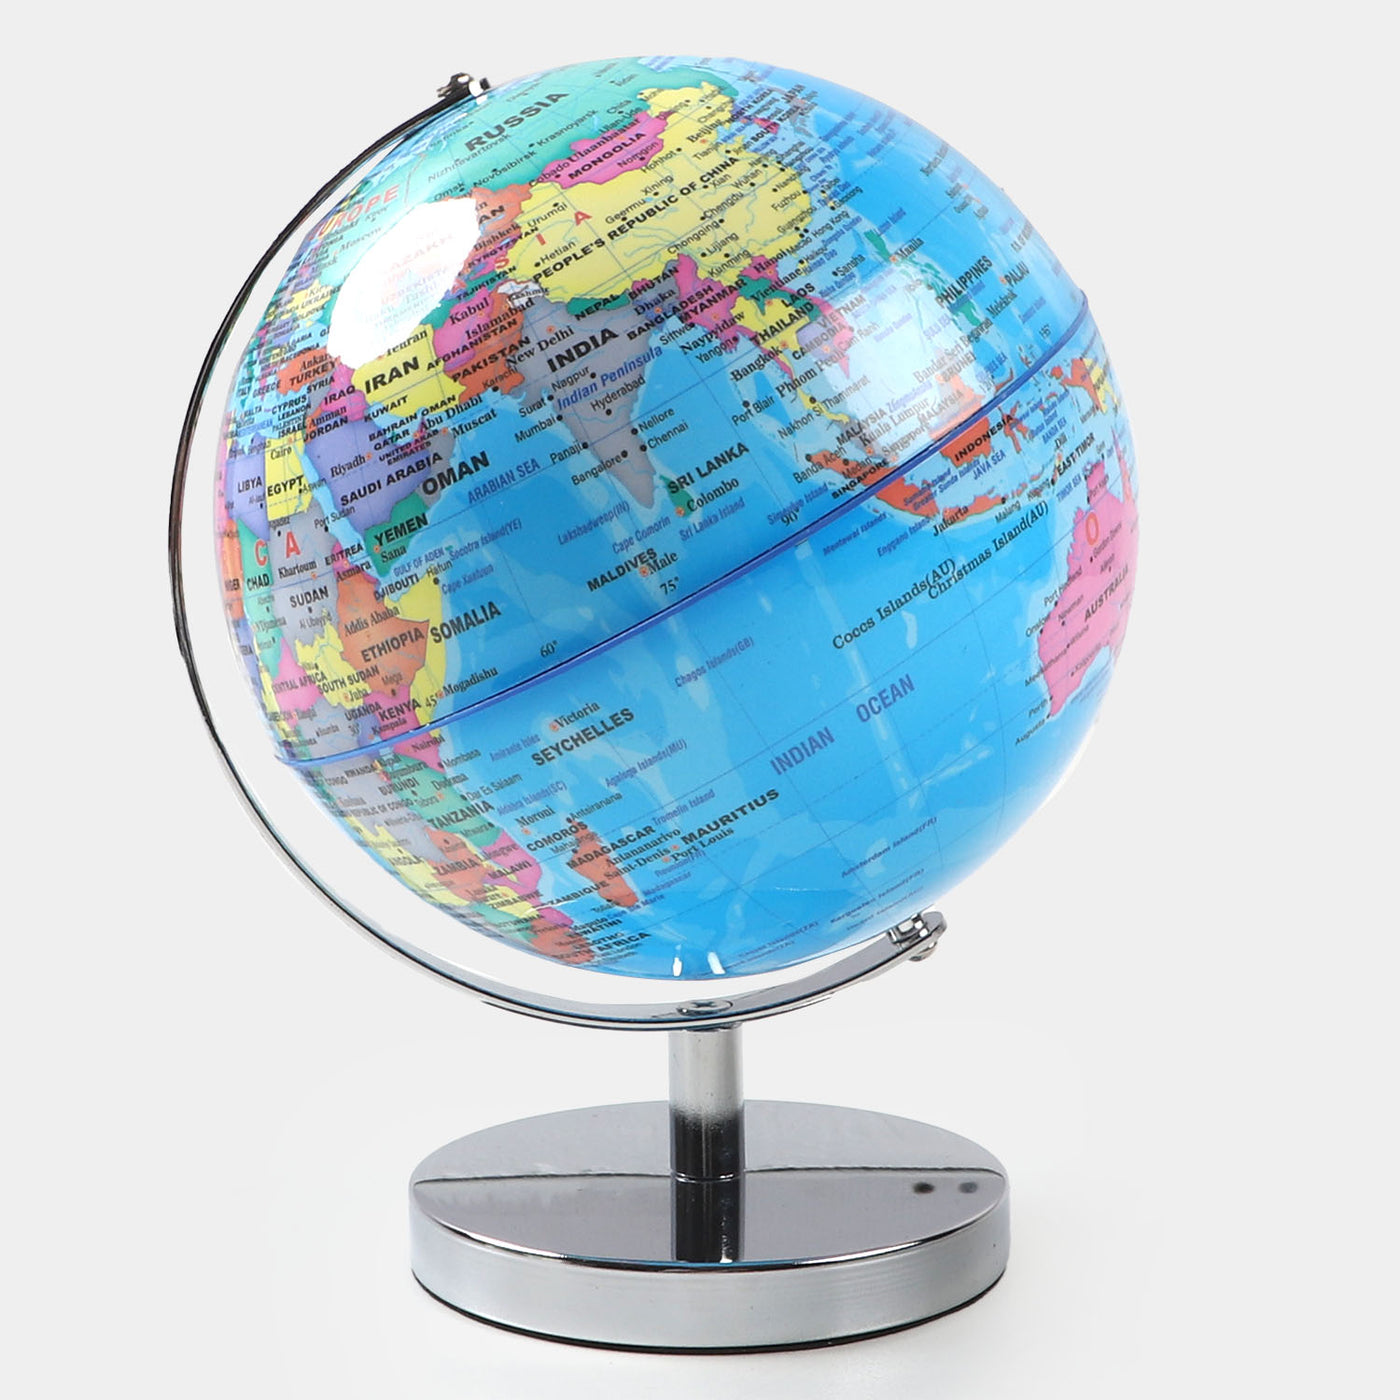 Globe Earth Rotating World Map | 14.2CM